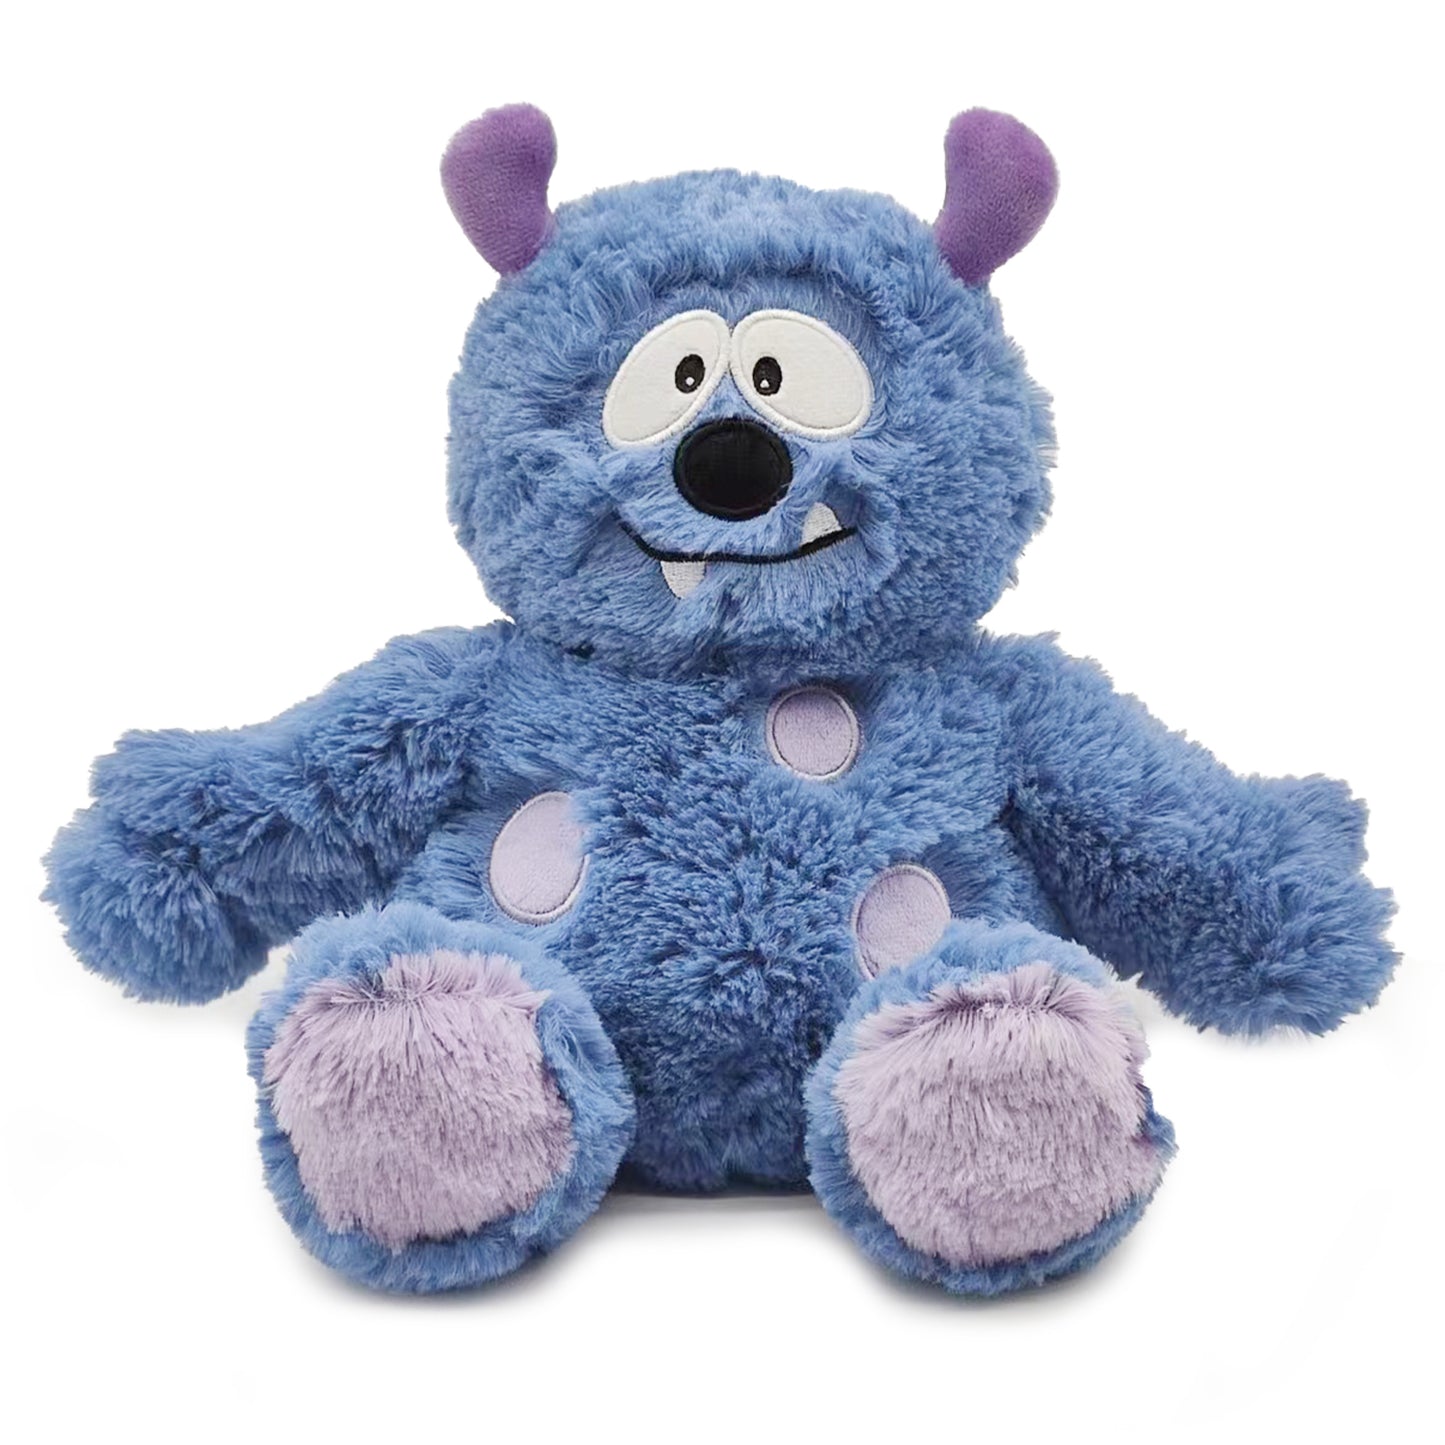 BLUE MONSTER - Warmies Cozy Plush Heatable Lavender Scented Stuffed Animal